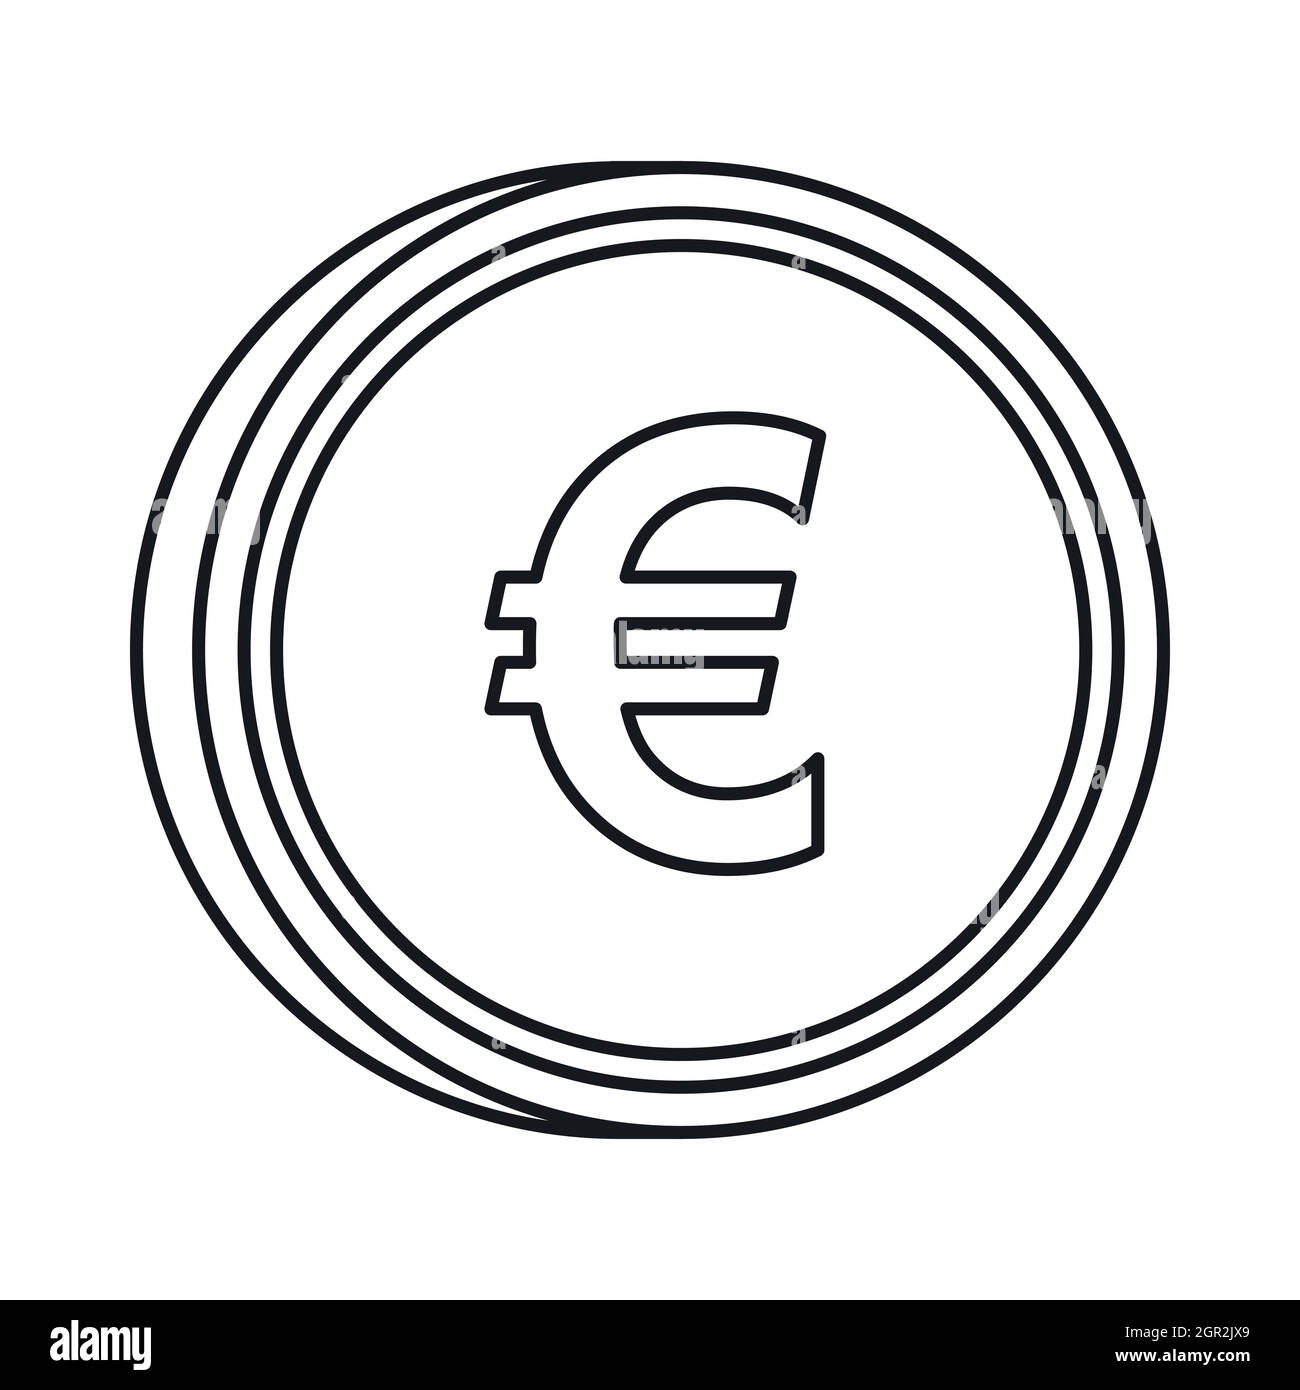 20 Euro sign icon. Stock Vector by ©Blankstock 112419502